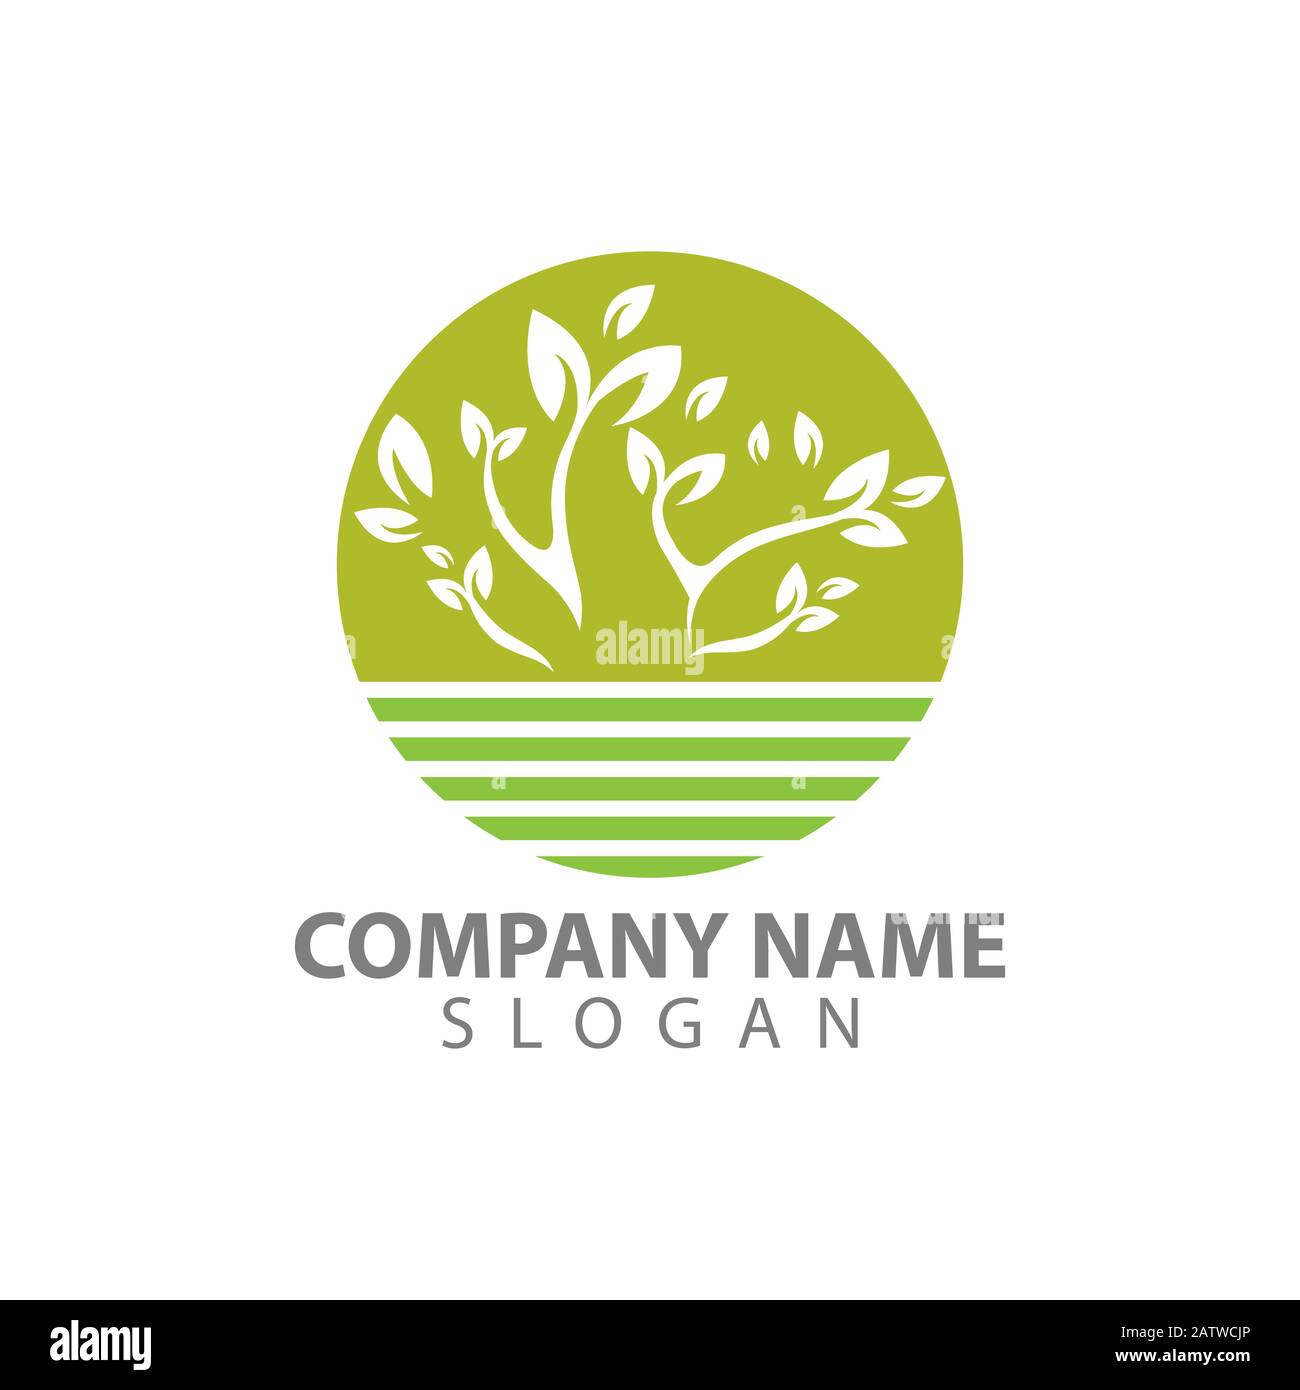 landscape logo for lawn or gardening business, organization or website Stock Vector